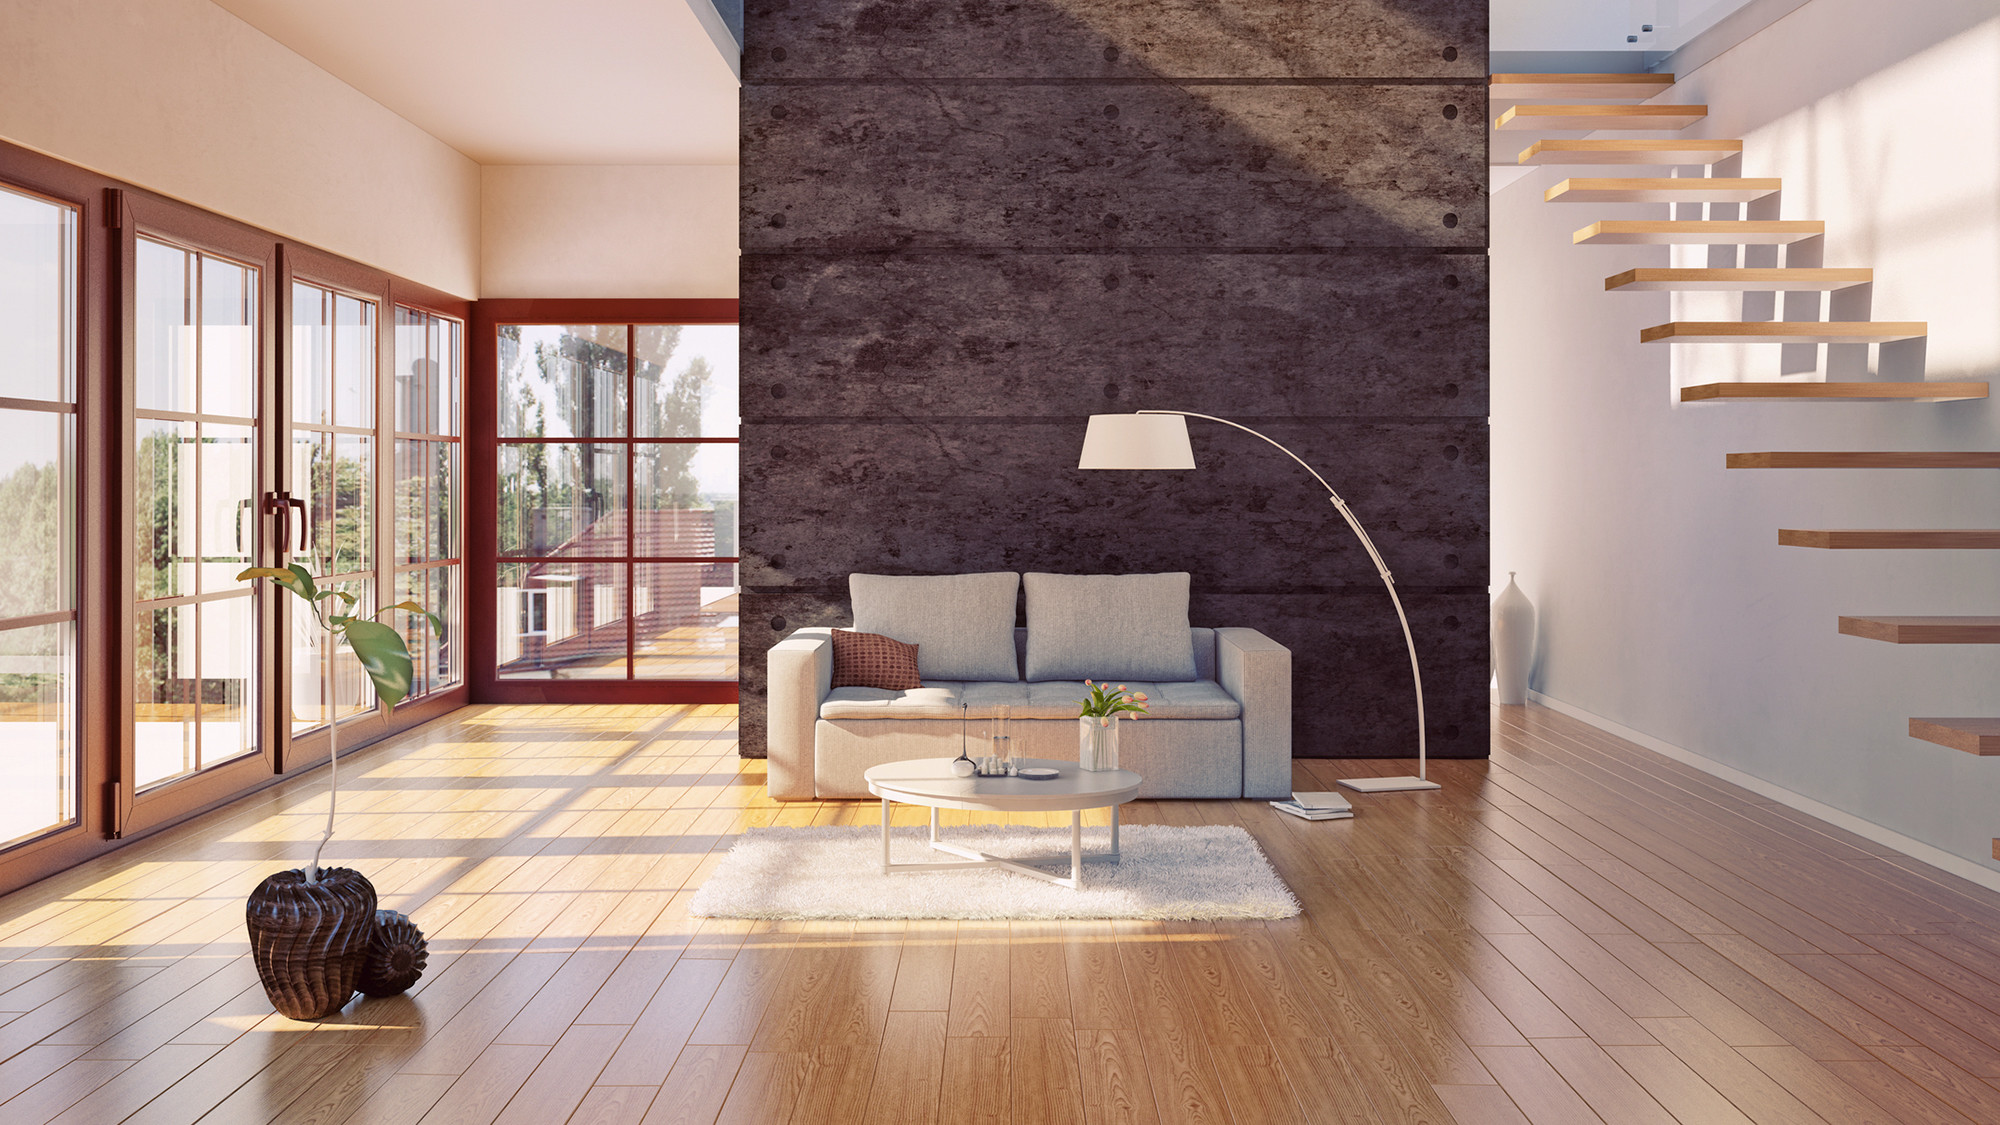 Quality Hardwood Floor Installation Of Do Hardwood Floors Provide the Best Return On Investment Realtor Coma within Hardwood Floors Investment